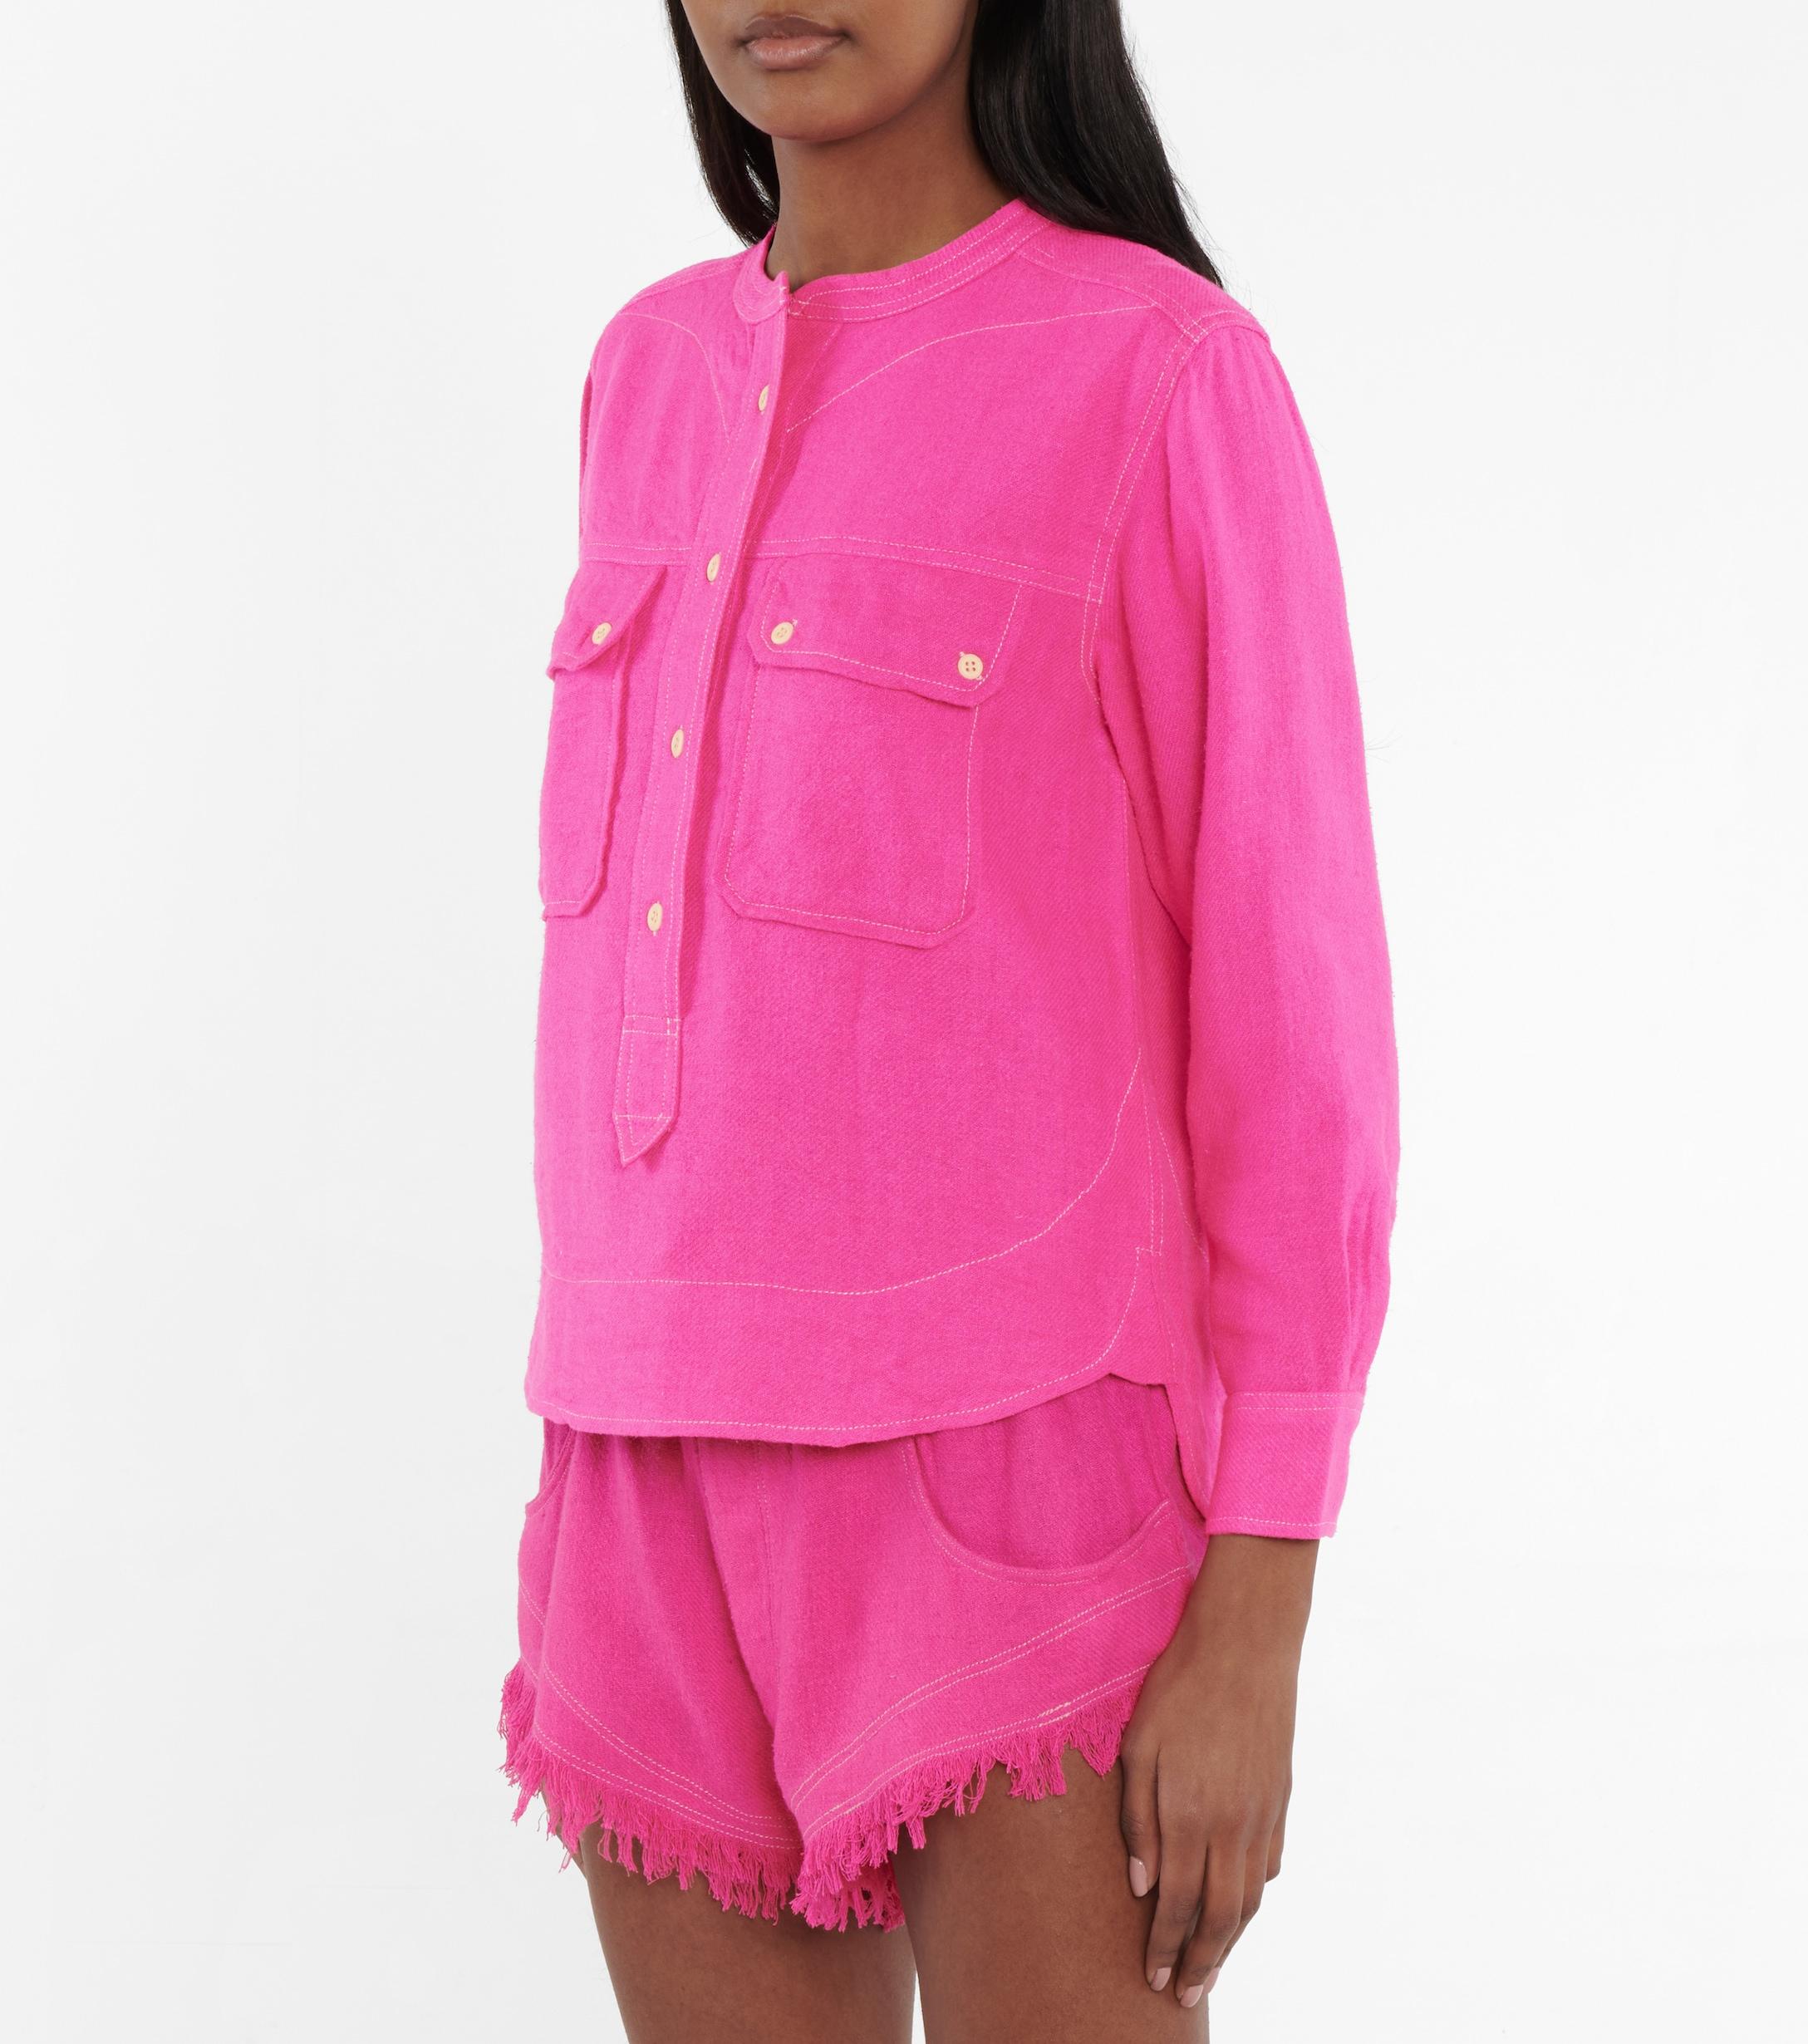 Étoile Isabel Marant Tecoyo Twill Shirt in Pink Lyst